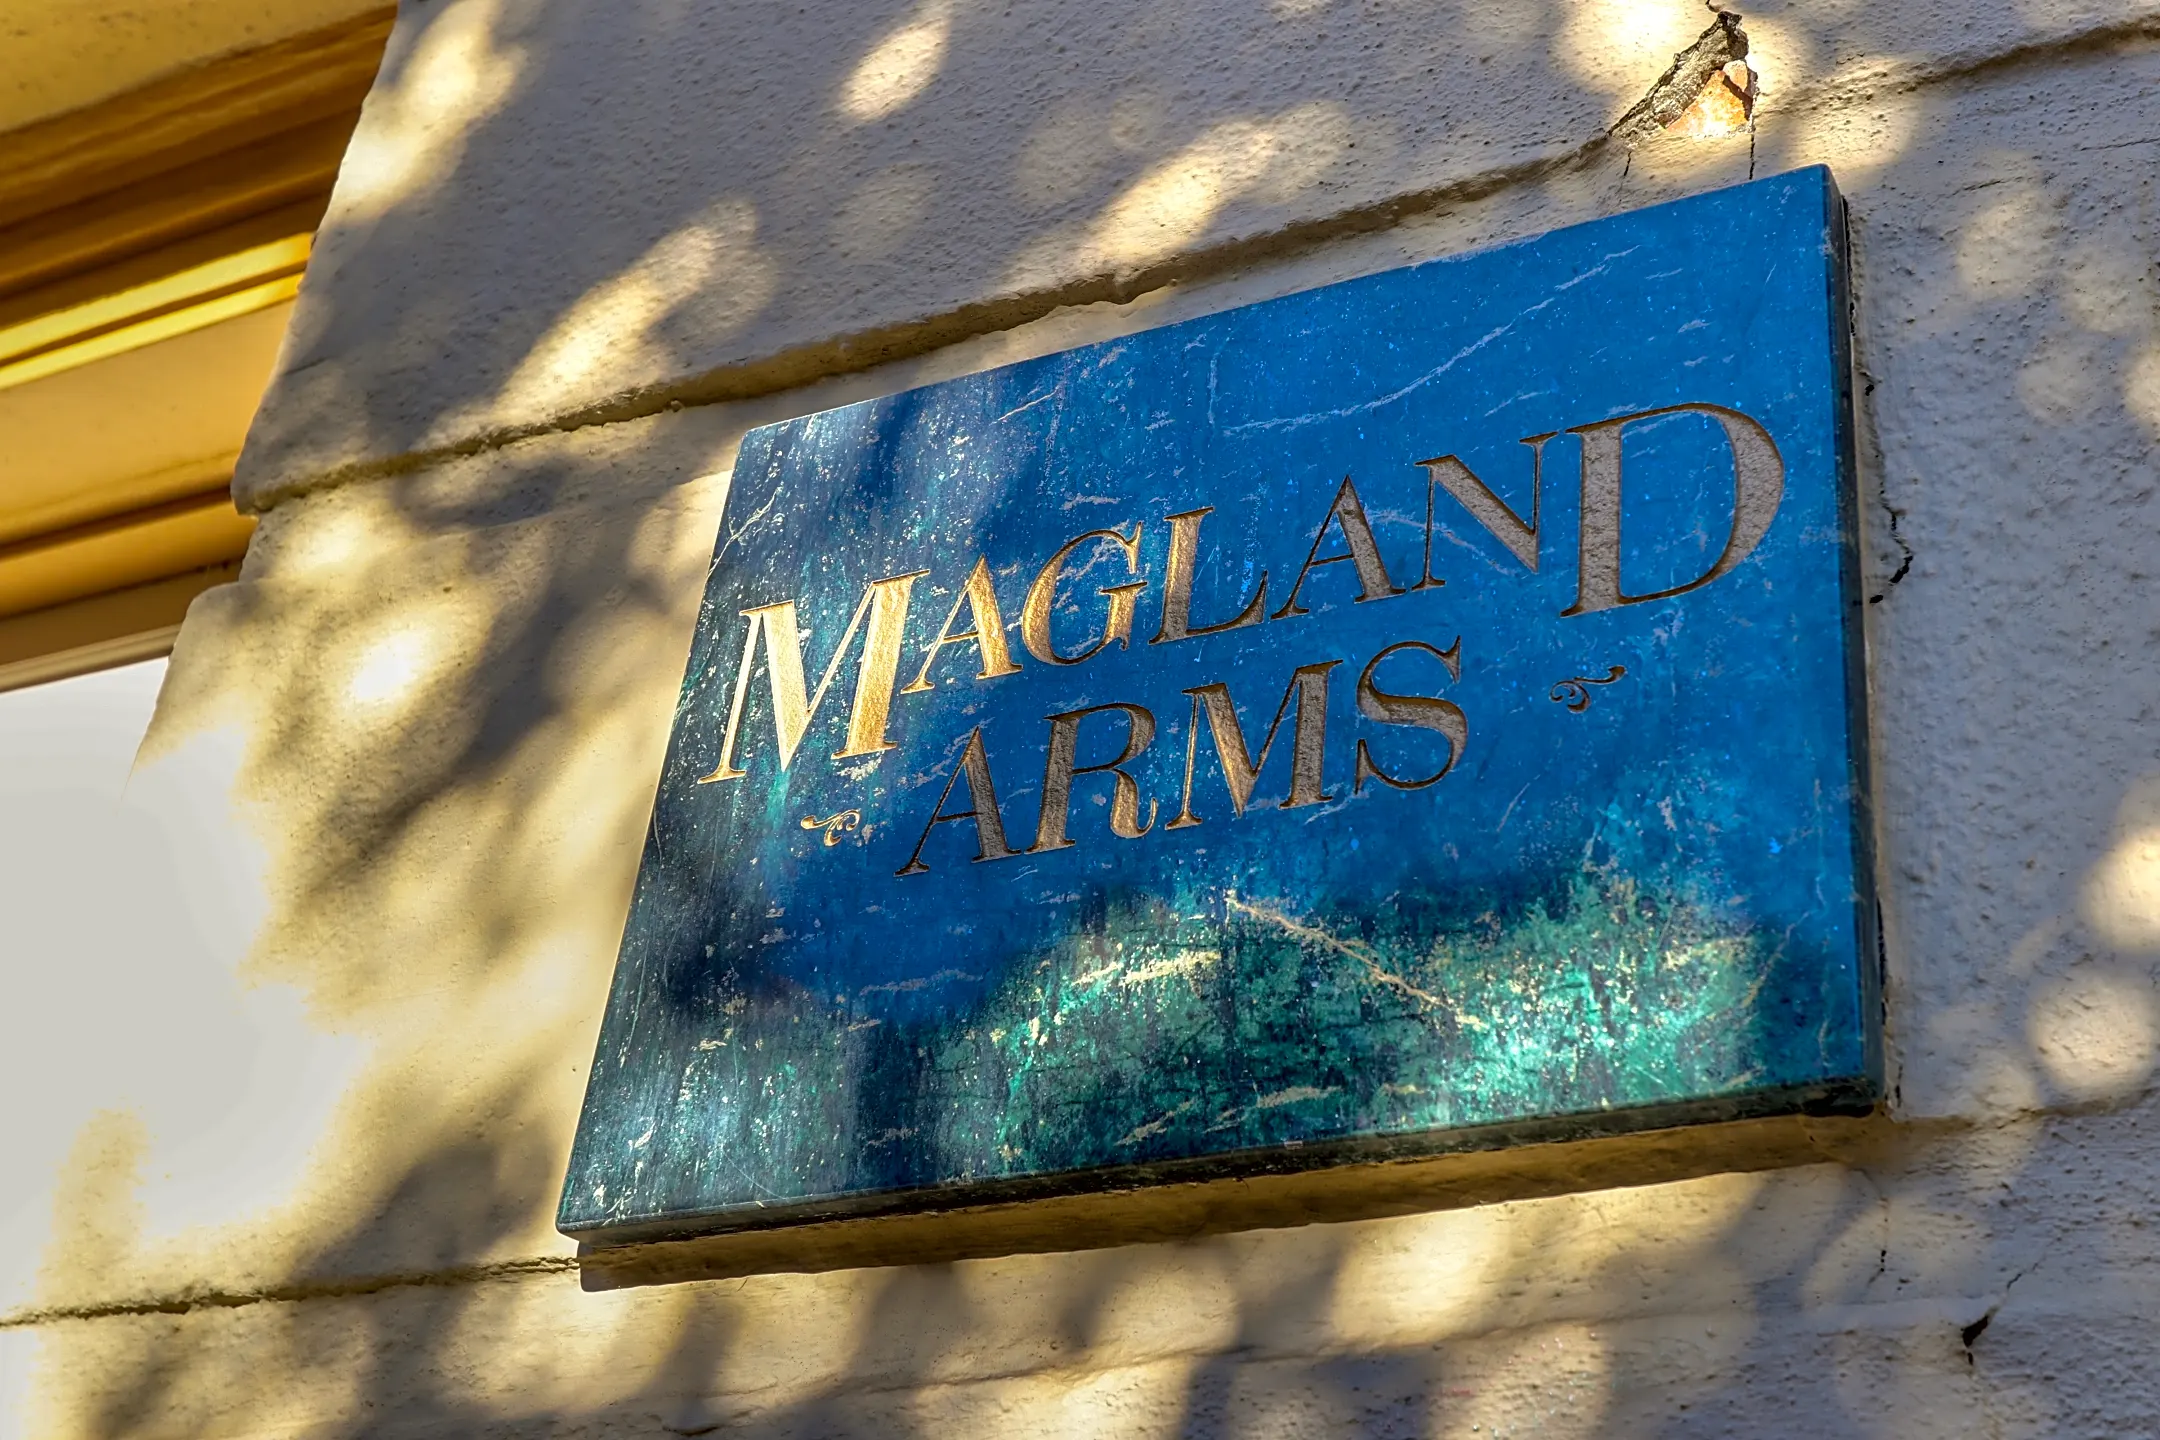 Community Signage - Magland Arms Apartments - San Francisco, CA